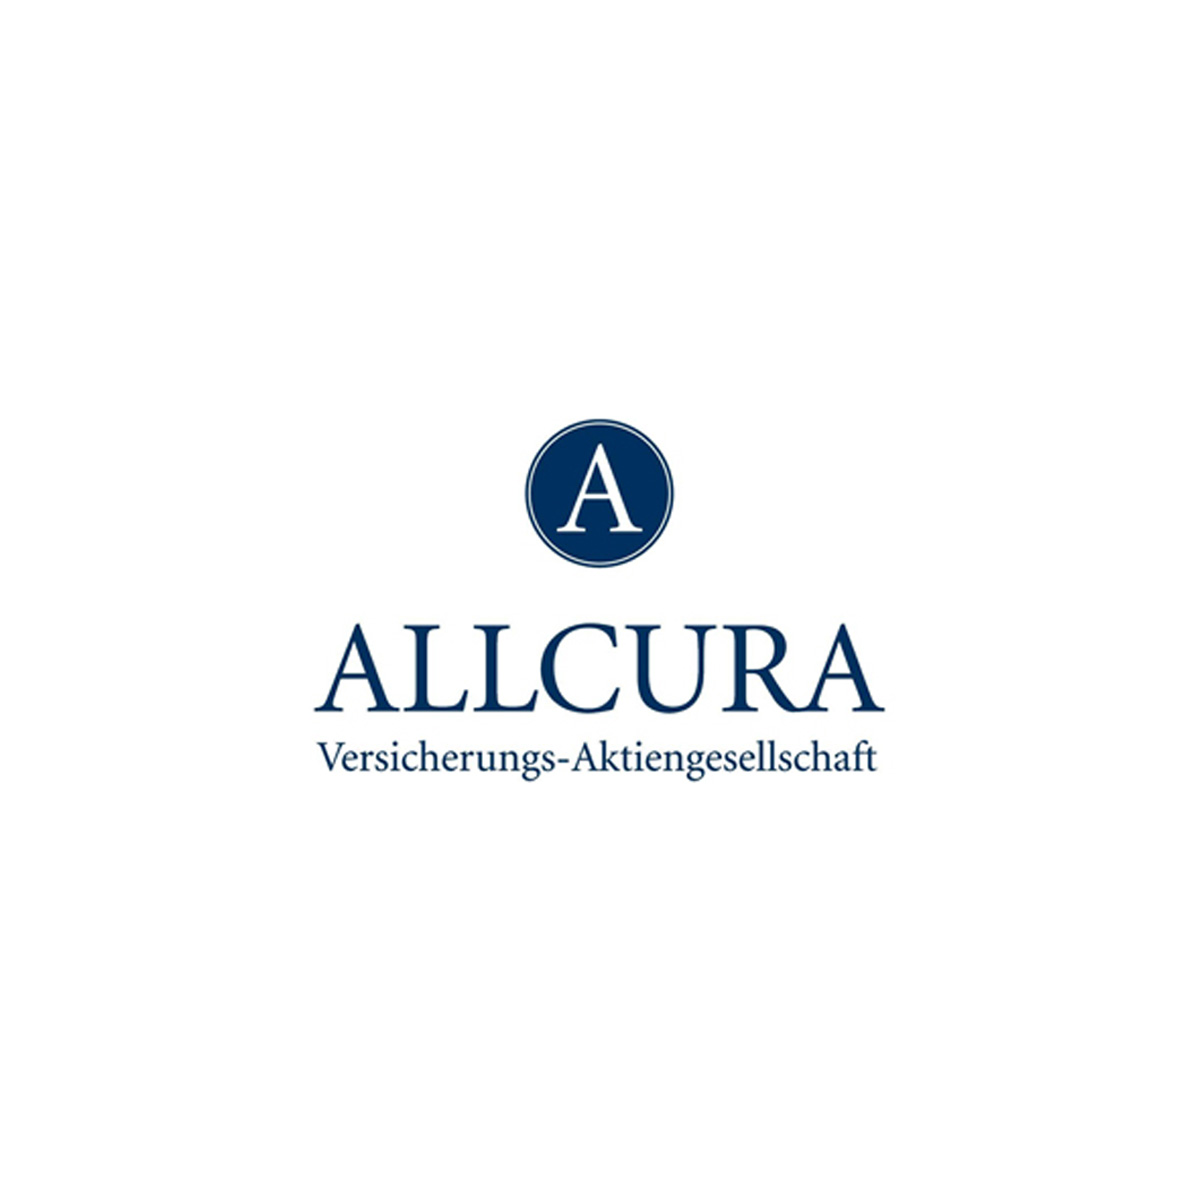 ALLCURA Versicherungs-Aktiengesellschaft